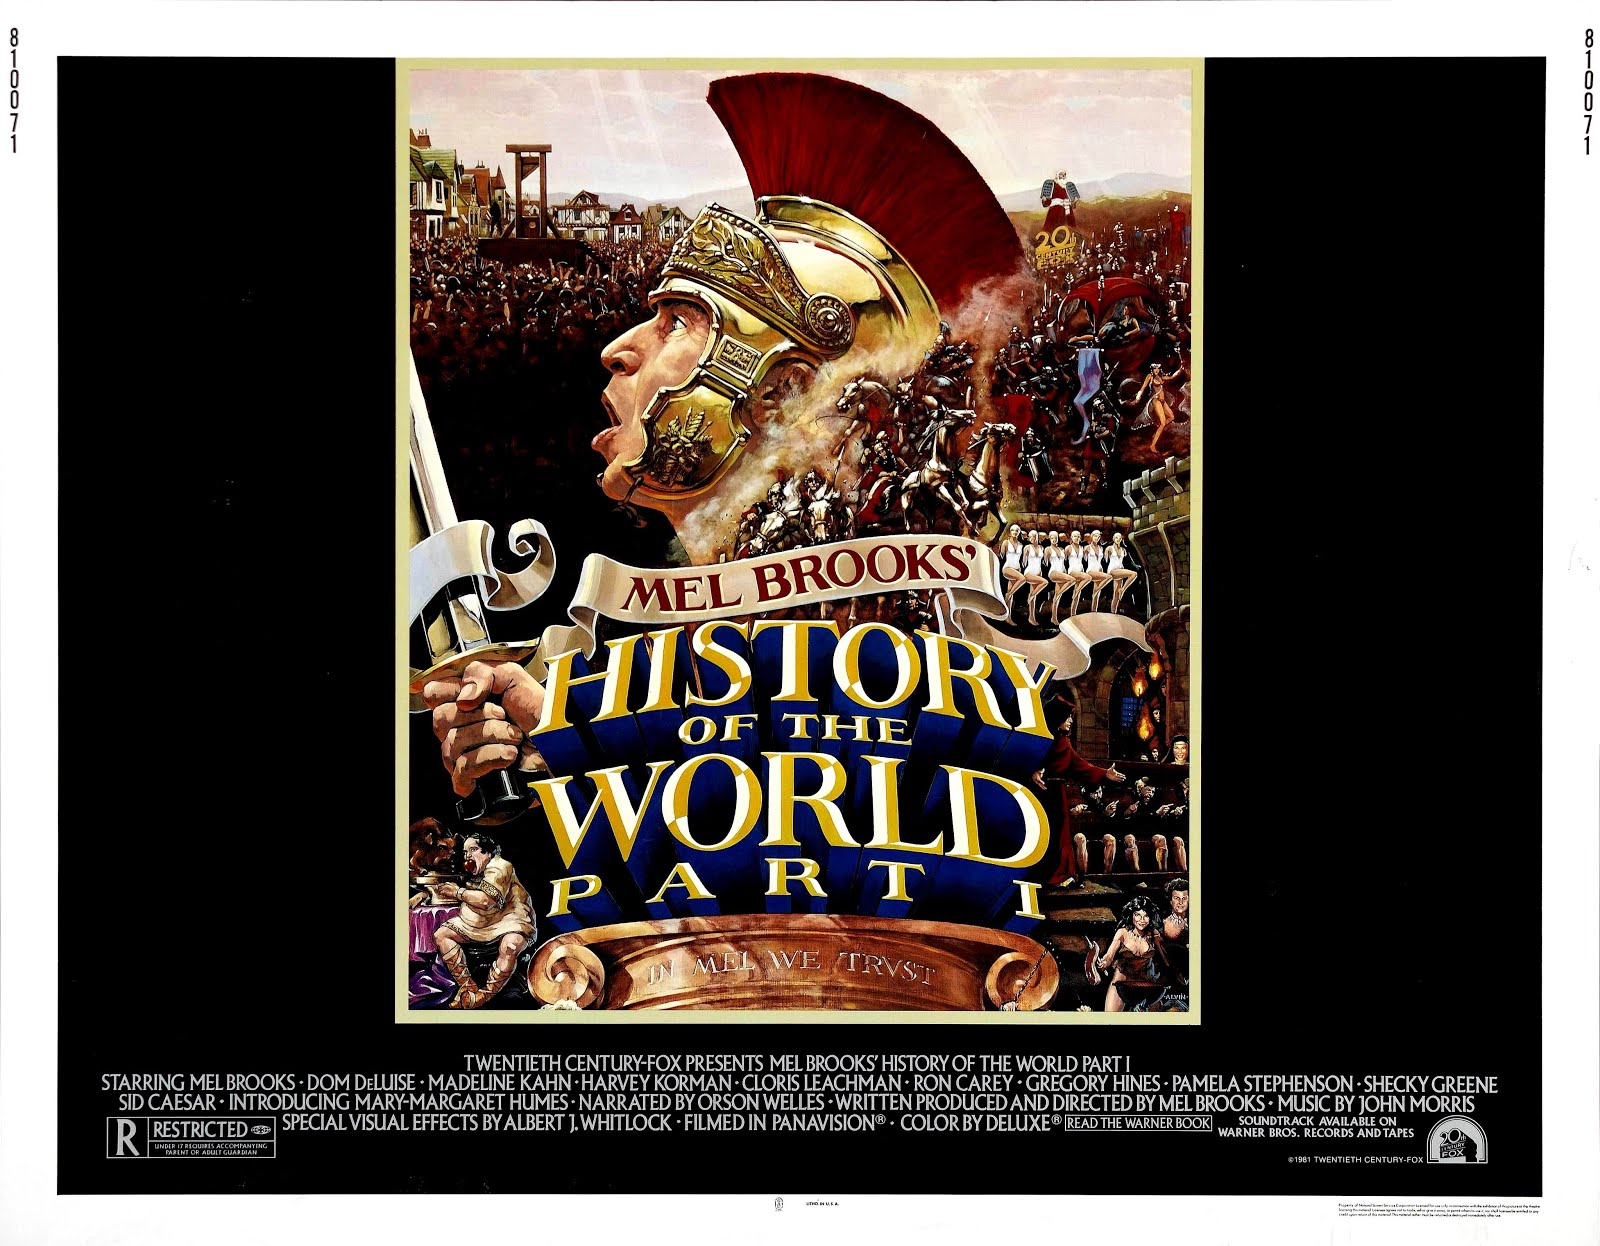 La folle histoire du monde (1980) Mel Brooks - History of the world : Part I (05.05.1980 / 1980)